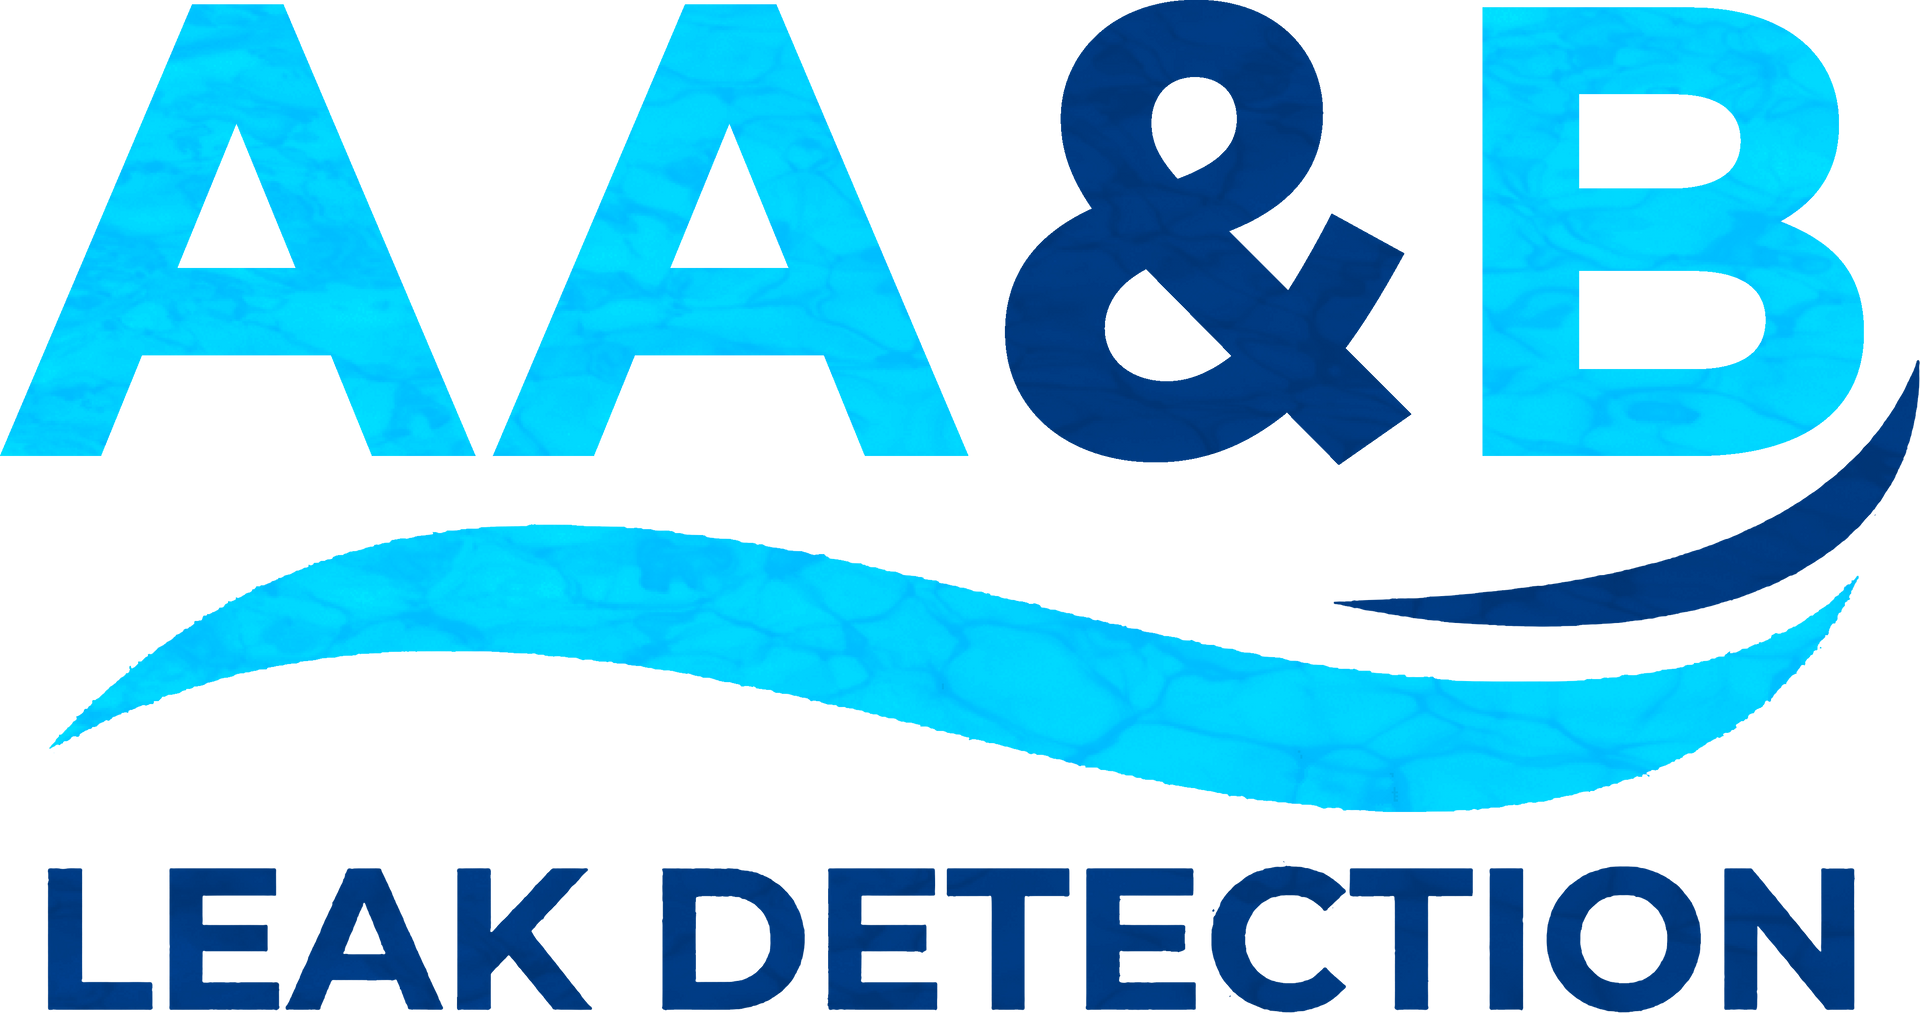 aa&b leak detection logo